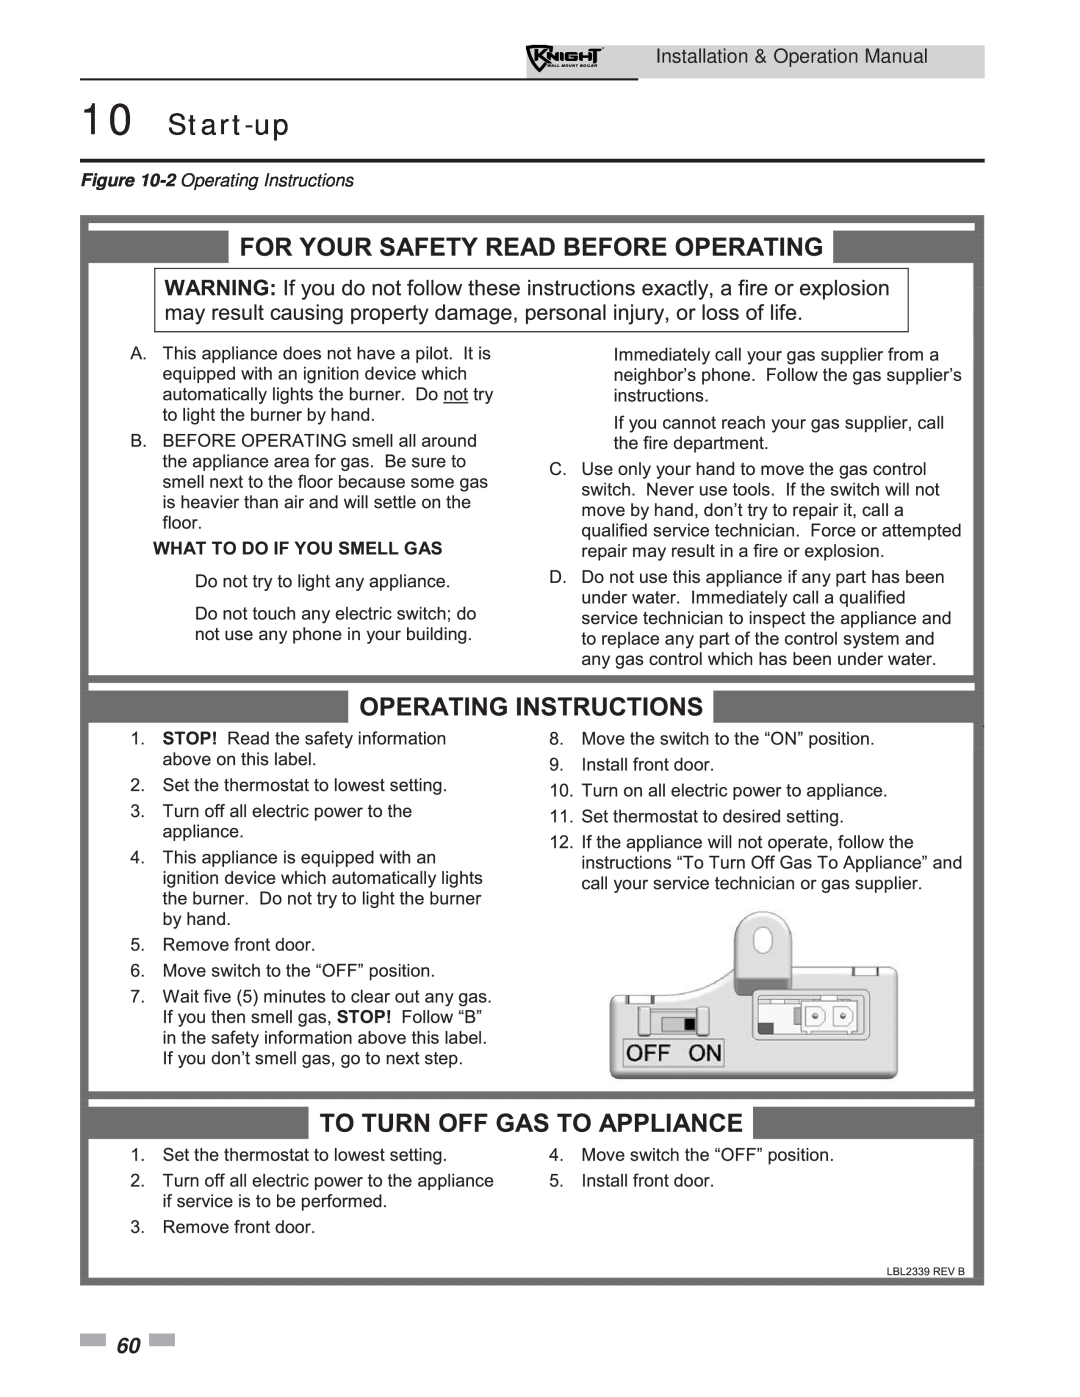 Lochinvar 51-211 operation manual 2 Operating Instructions, Start-up 